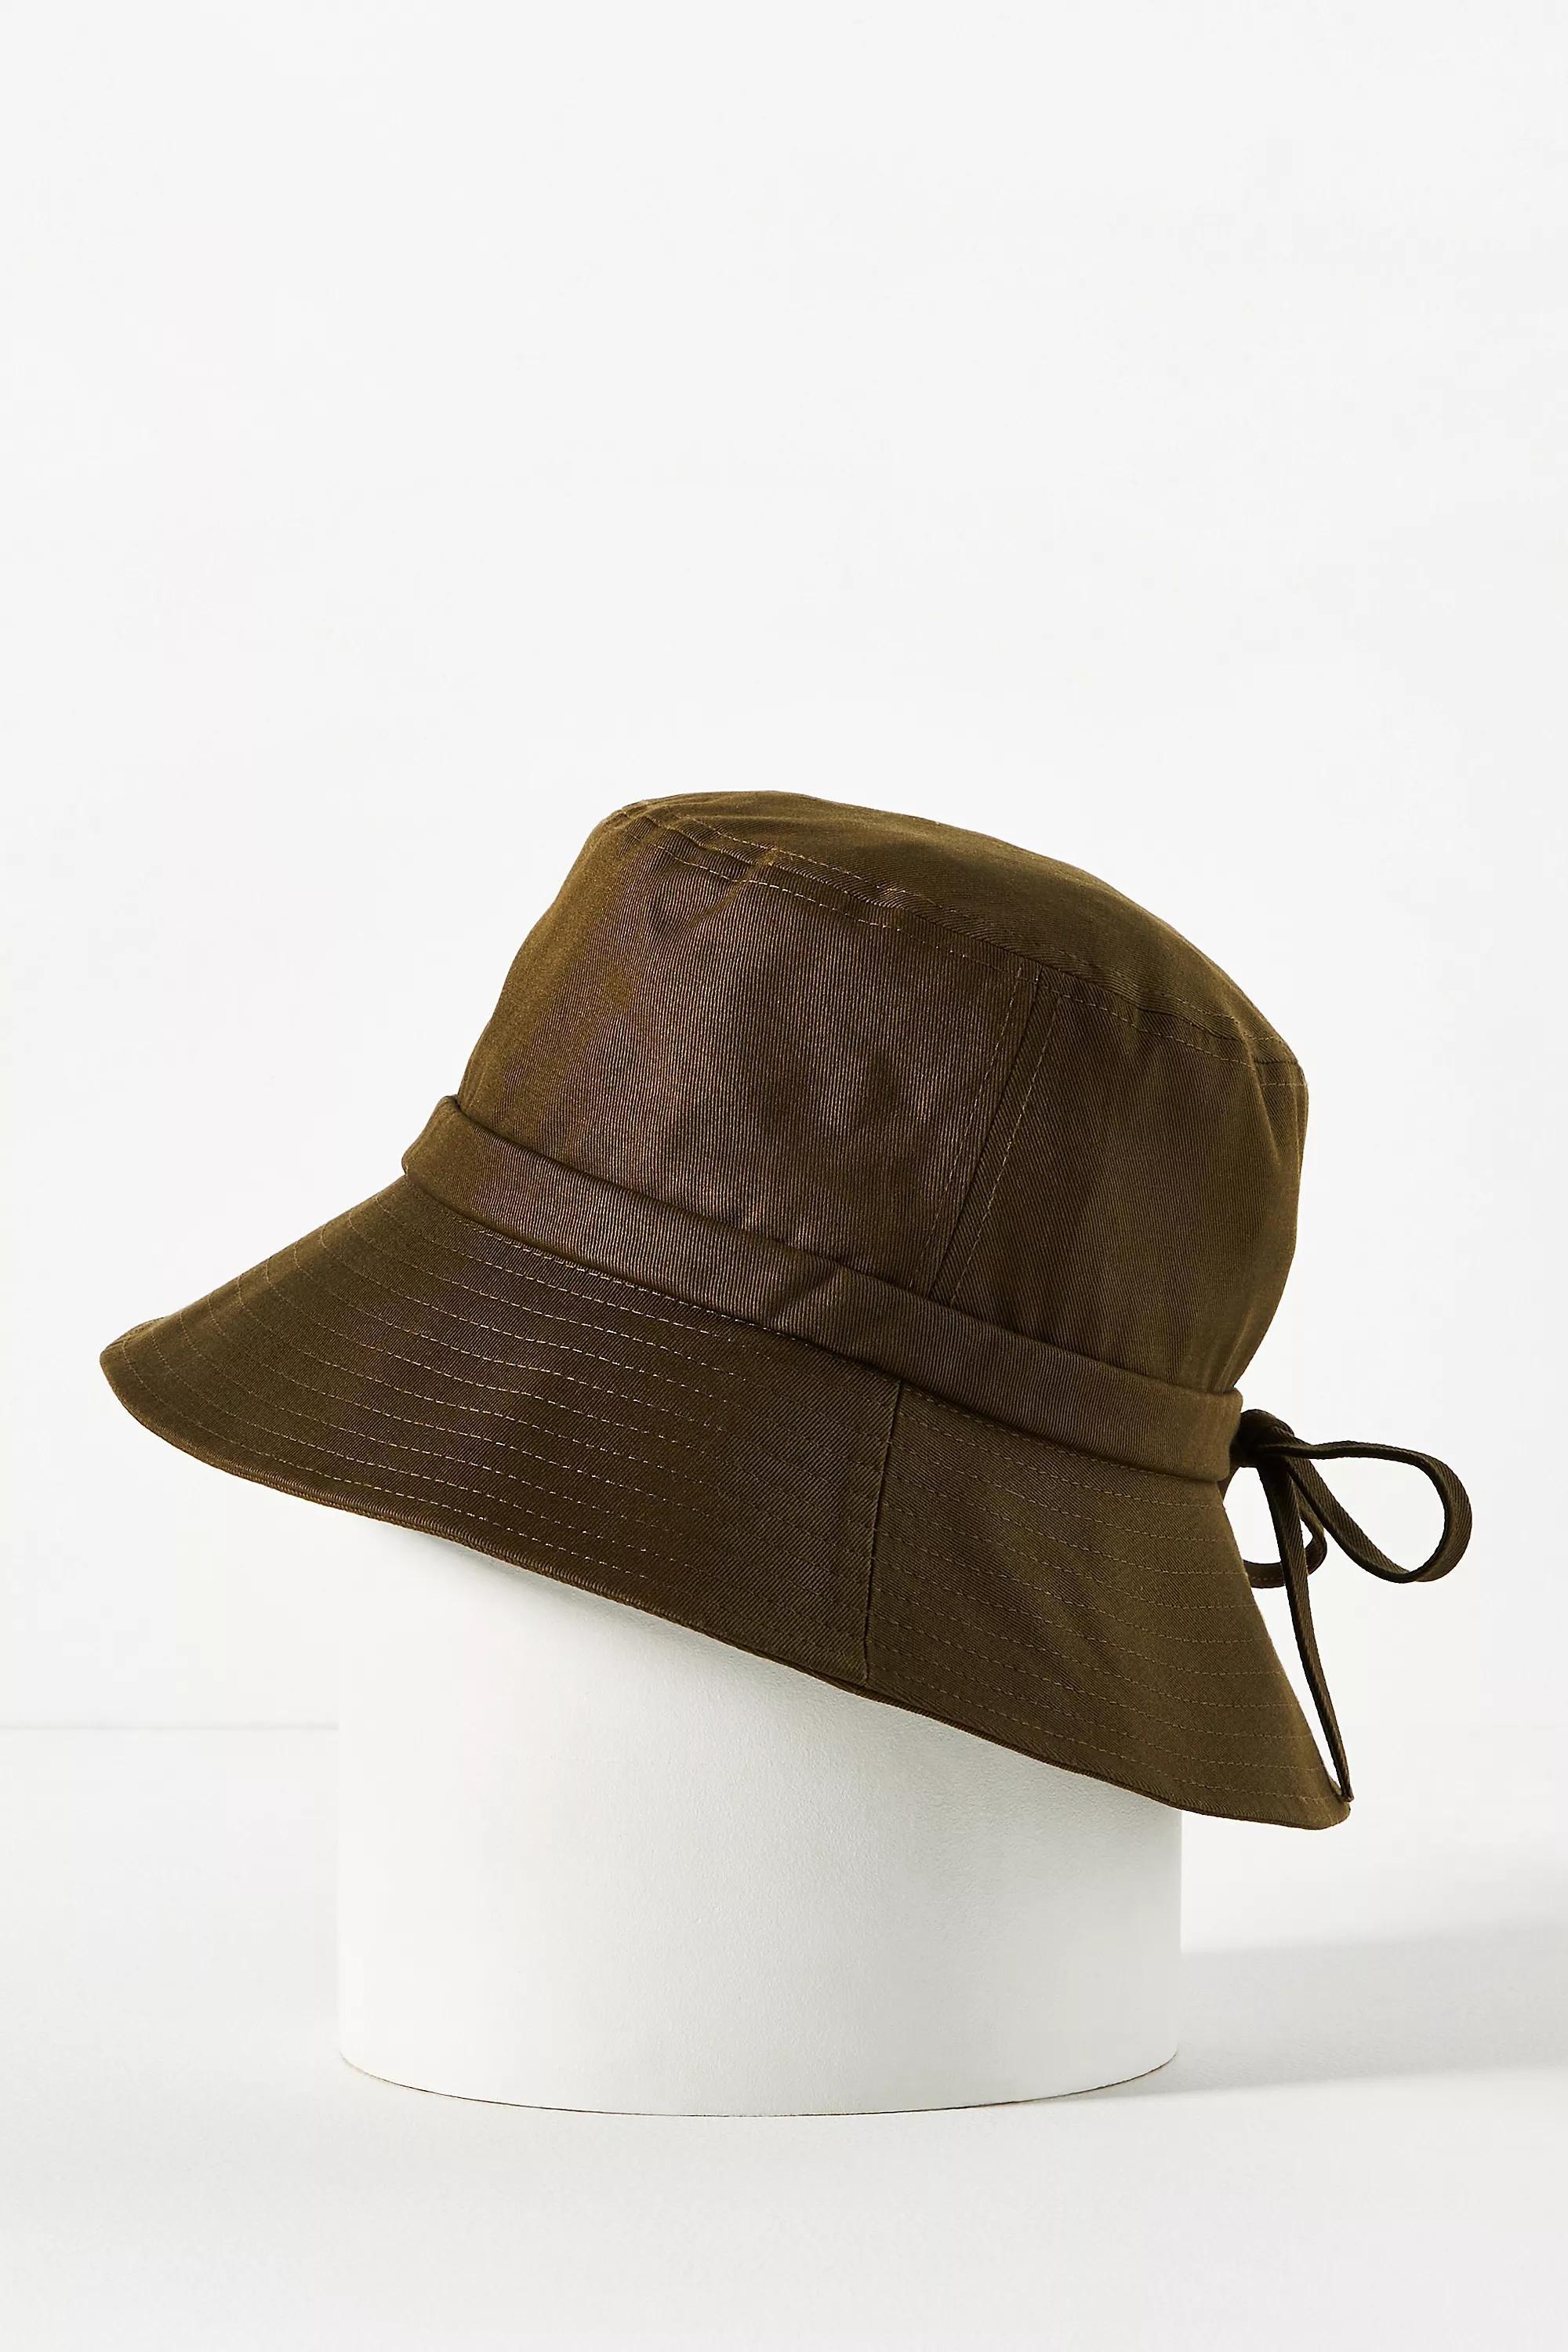 Anthropologie - Bow-Detail Cotton Bucket Hat, Green